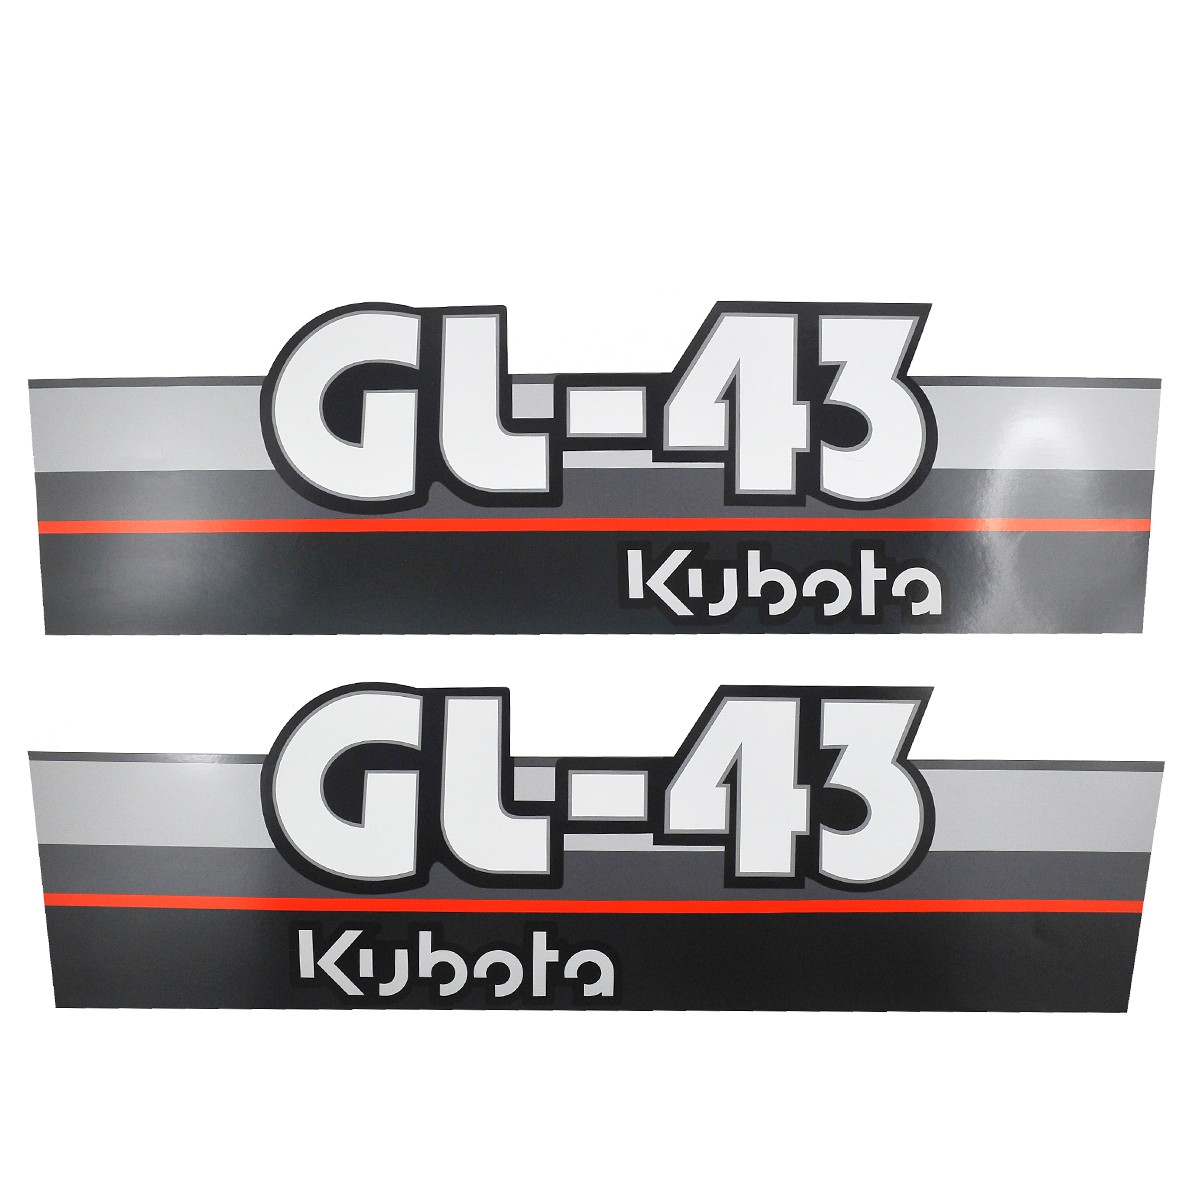 Kubota GL43 stickers